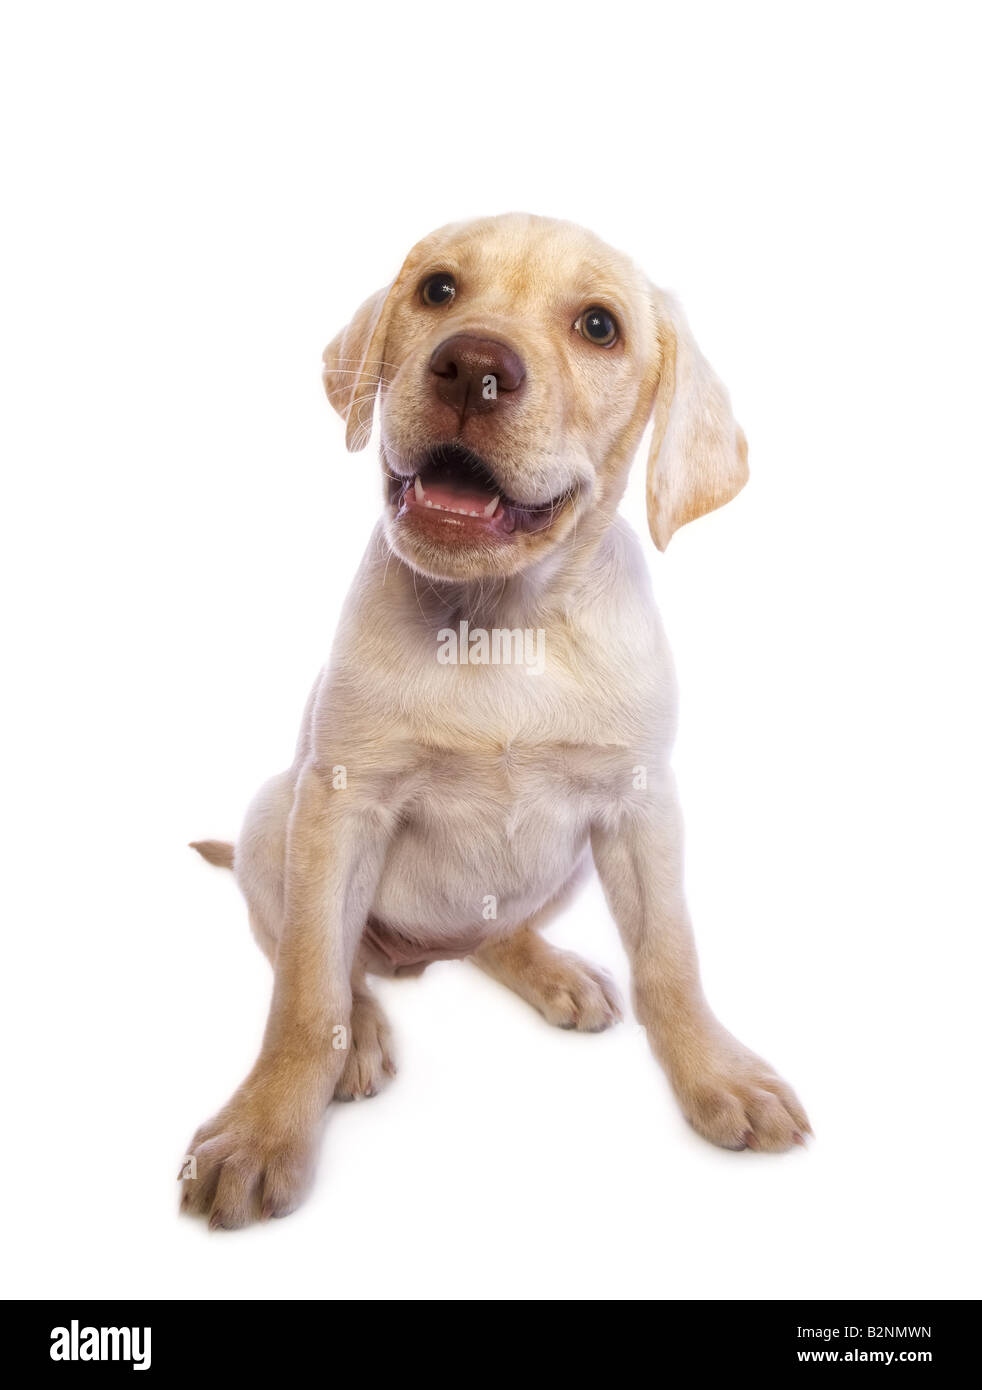 Adorabili e sorridendo felice giallo Labrador Retriever cucciolo isolato su sfondo bianco Foto Stock